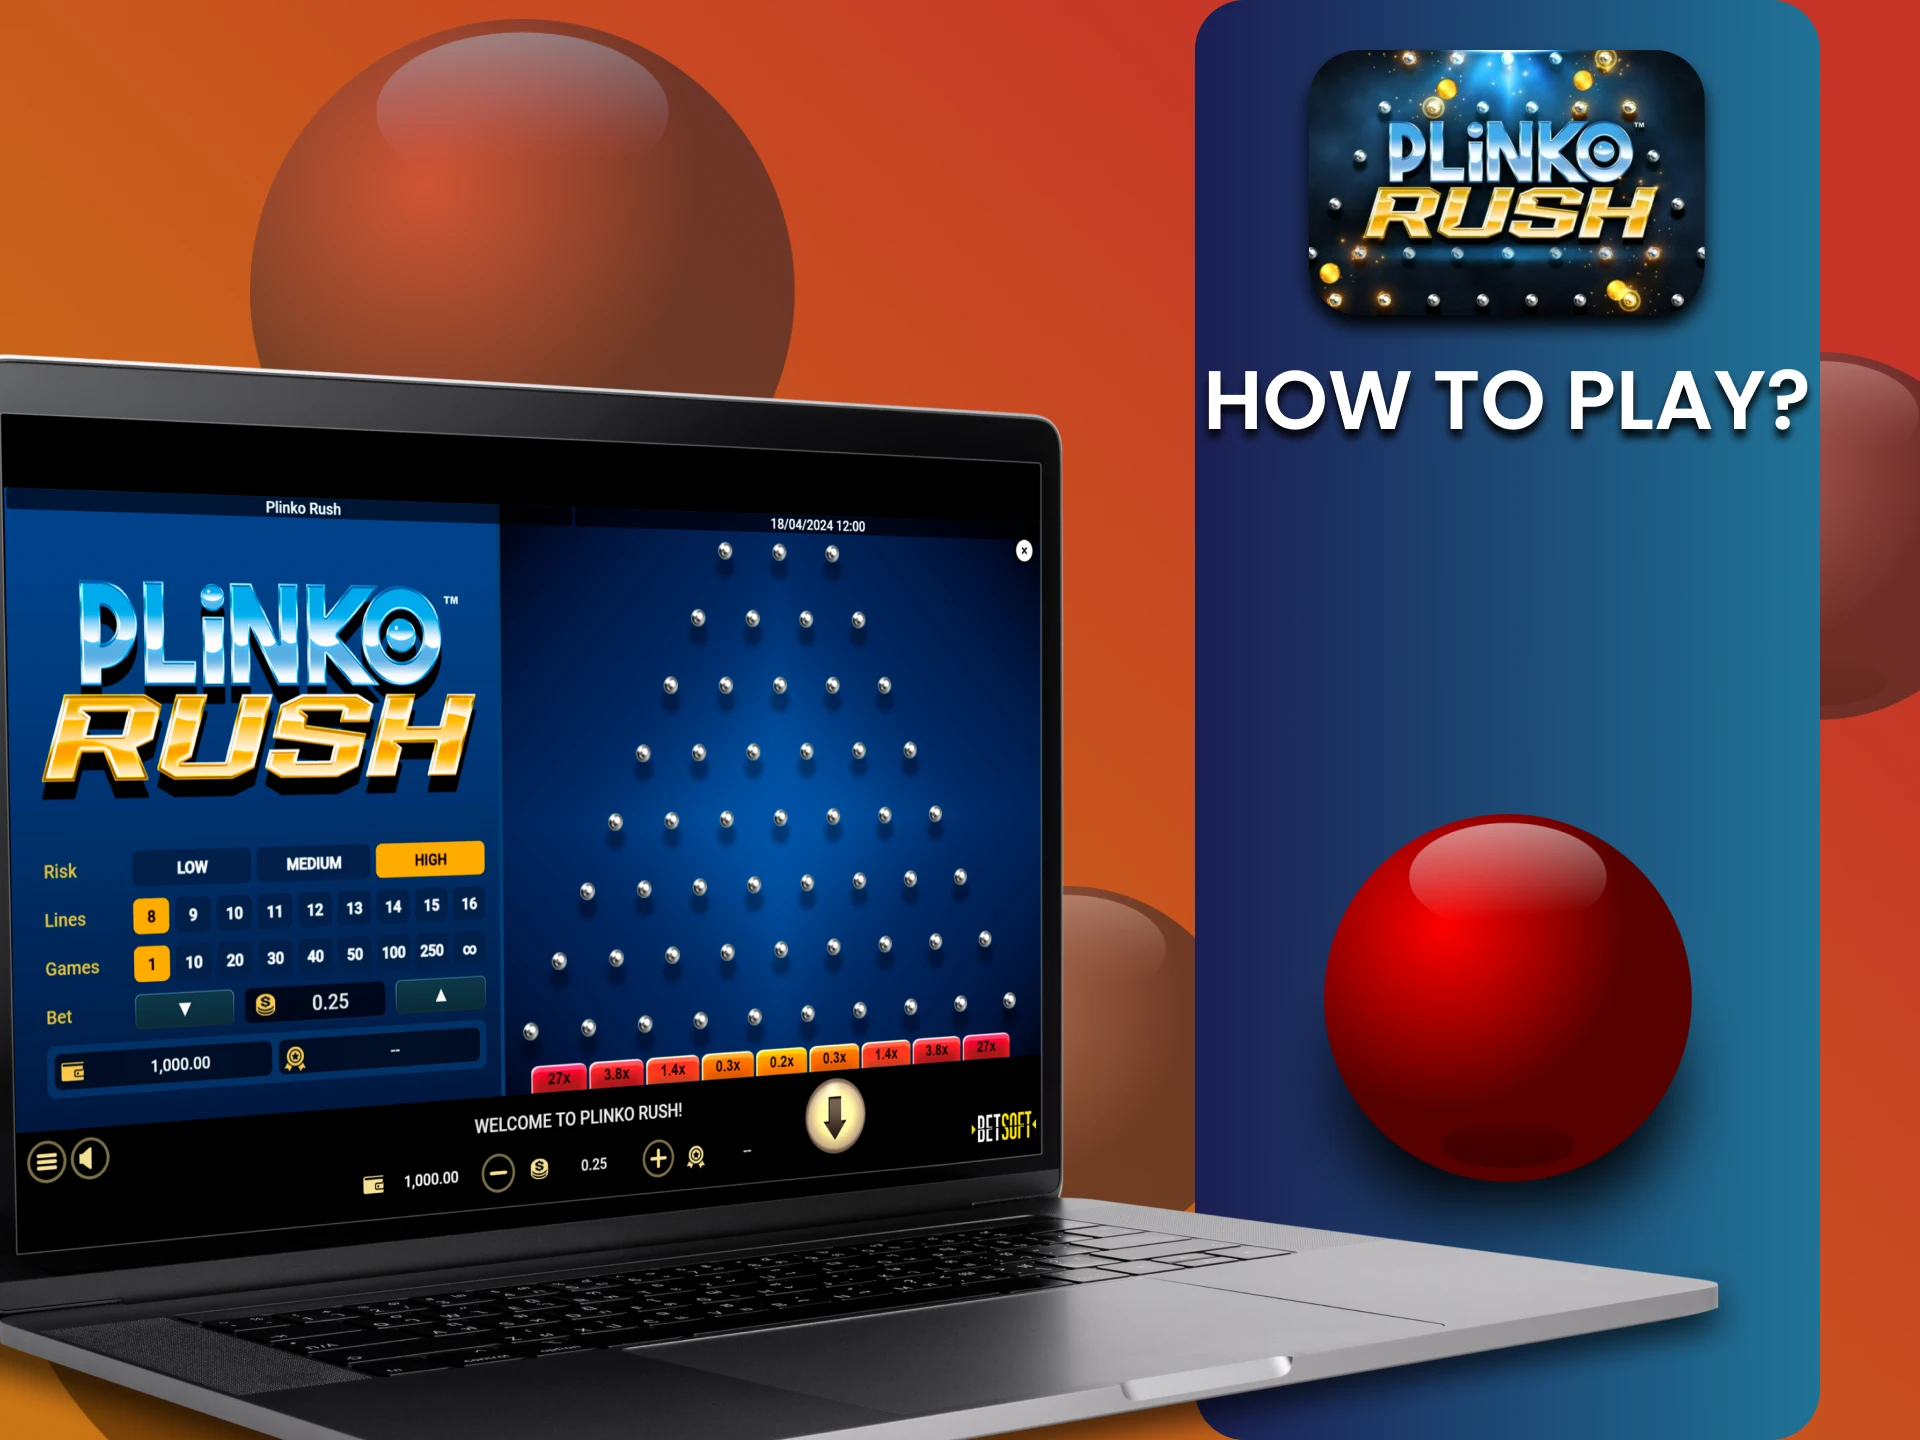 Select Plinko Rush in the casino section.